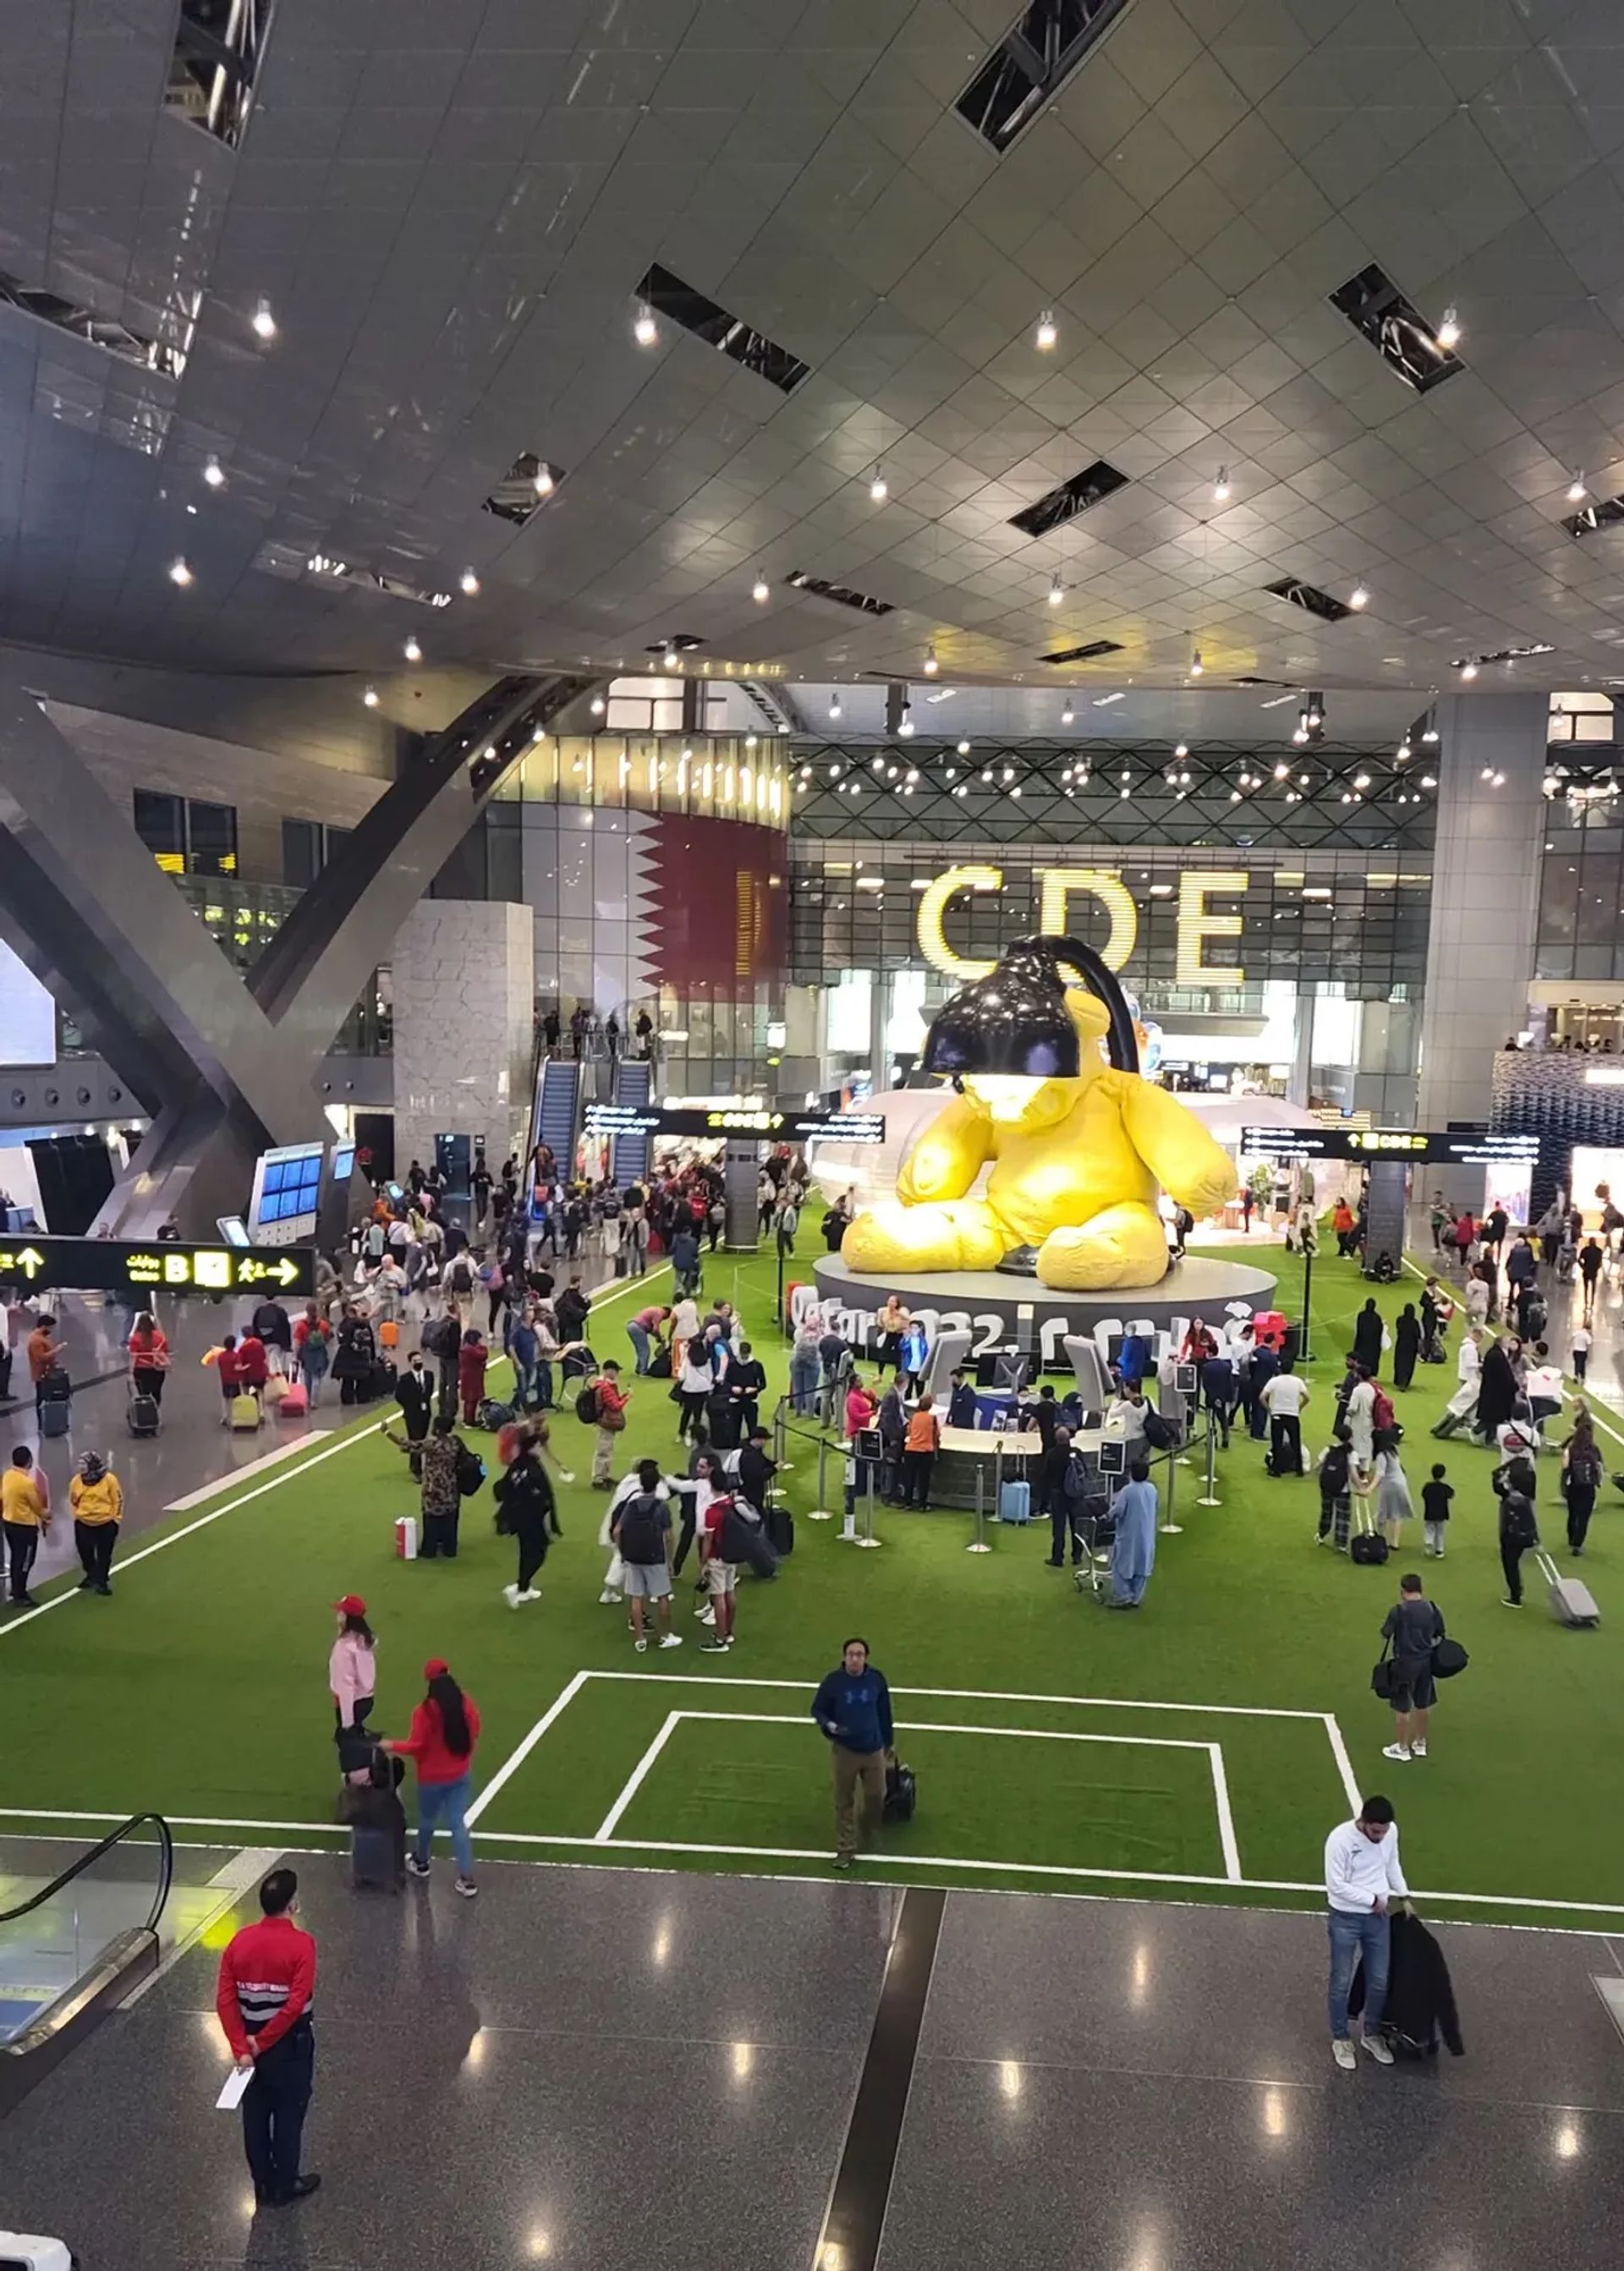 Qatar Airport Soccer Field